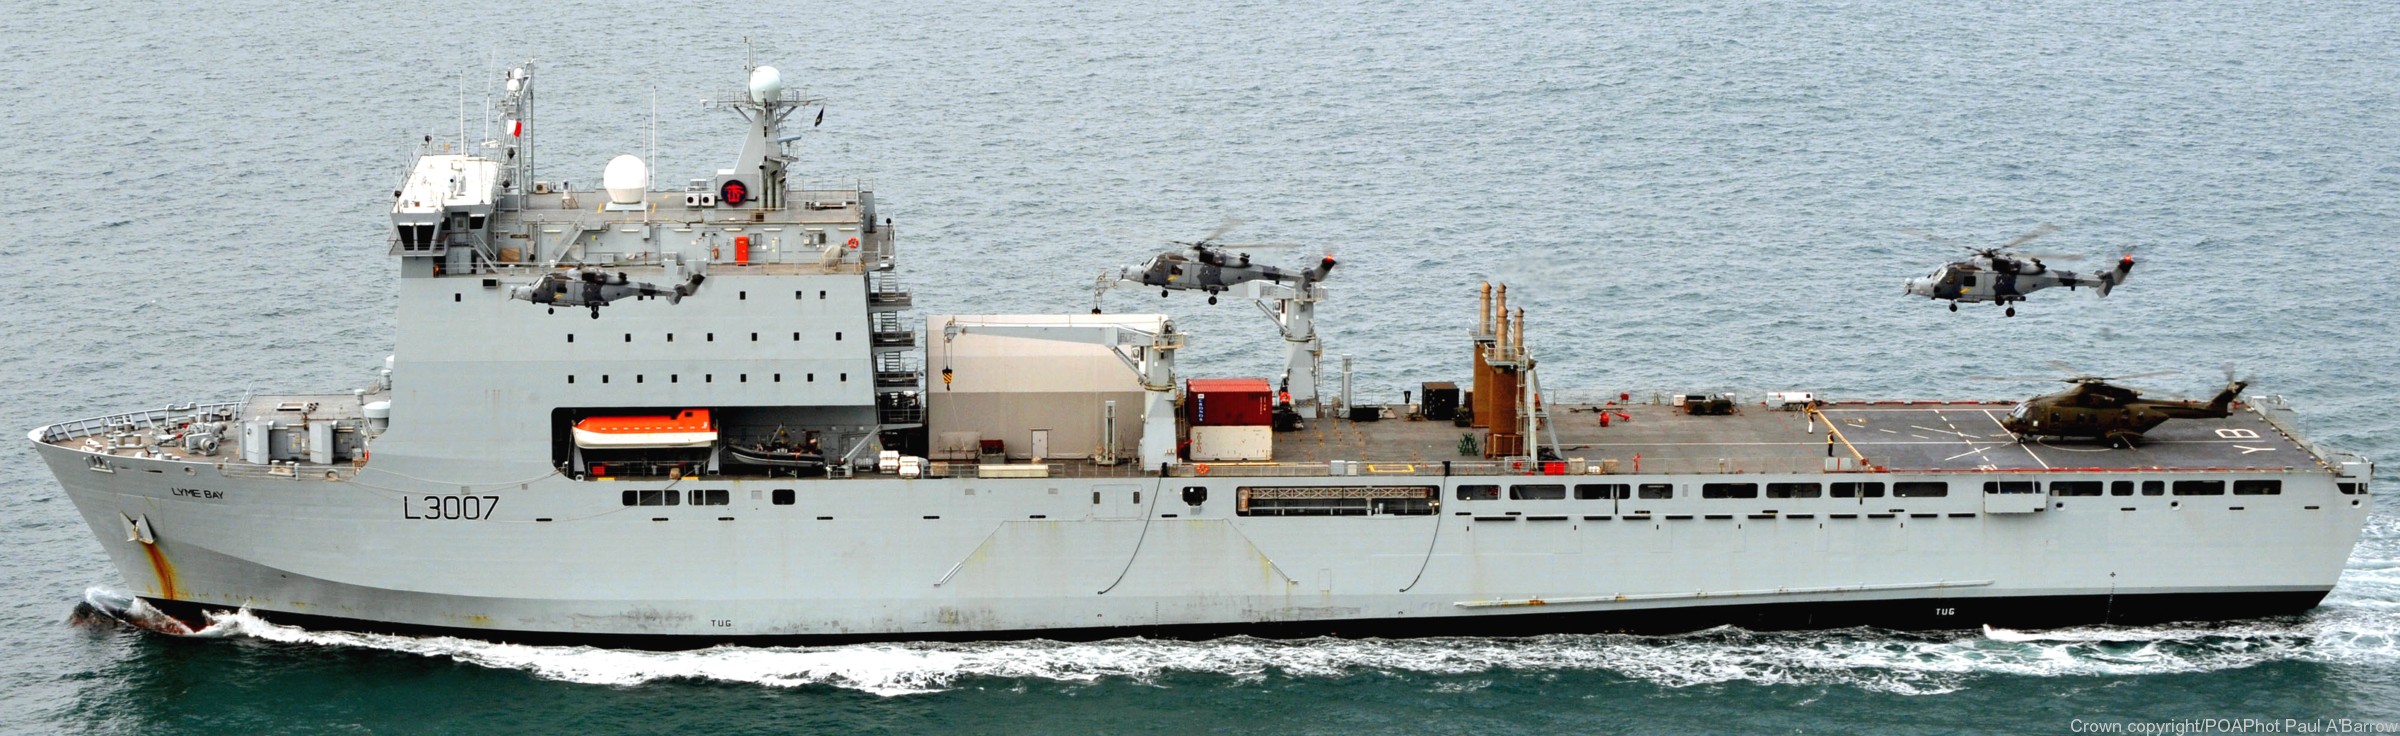 l-3007 rfa lyme bay dock landing ship royal fleet auxilary navy 38